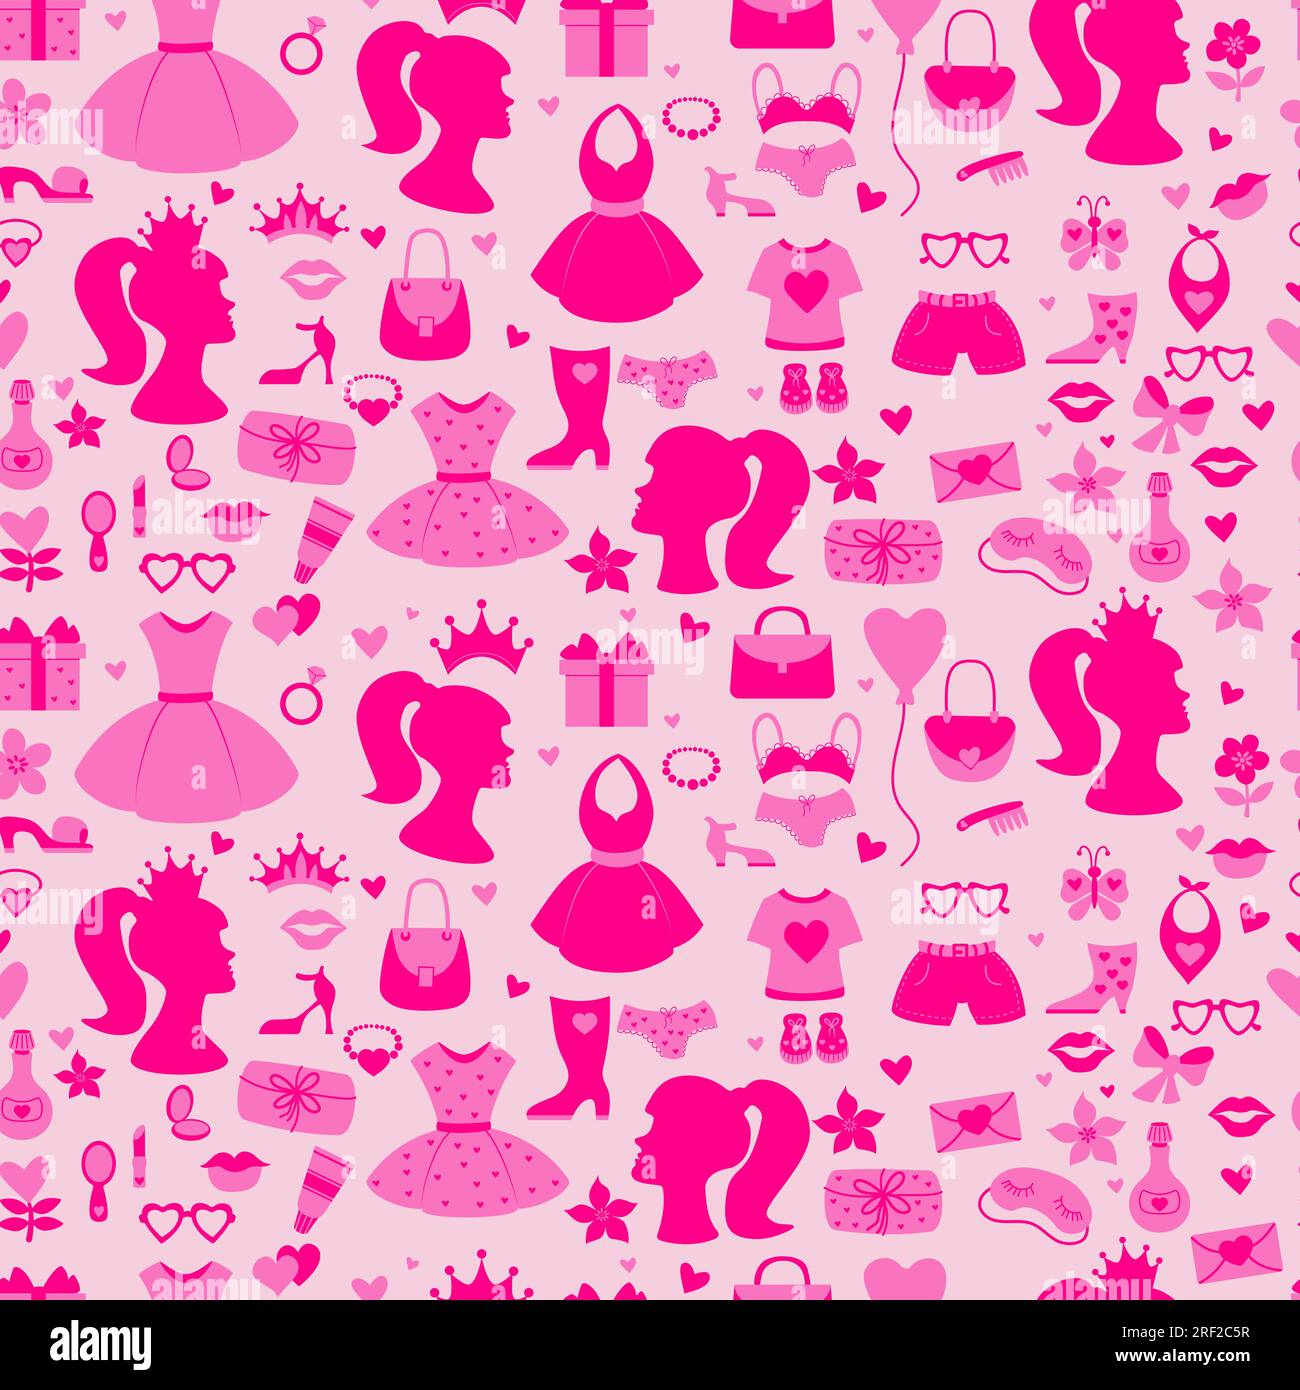 Barbiecore pink seamless pattern. Nostalgic Glamorous trendy